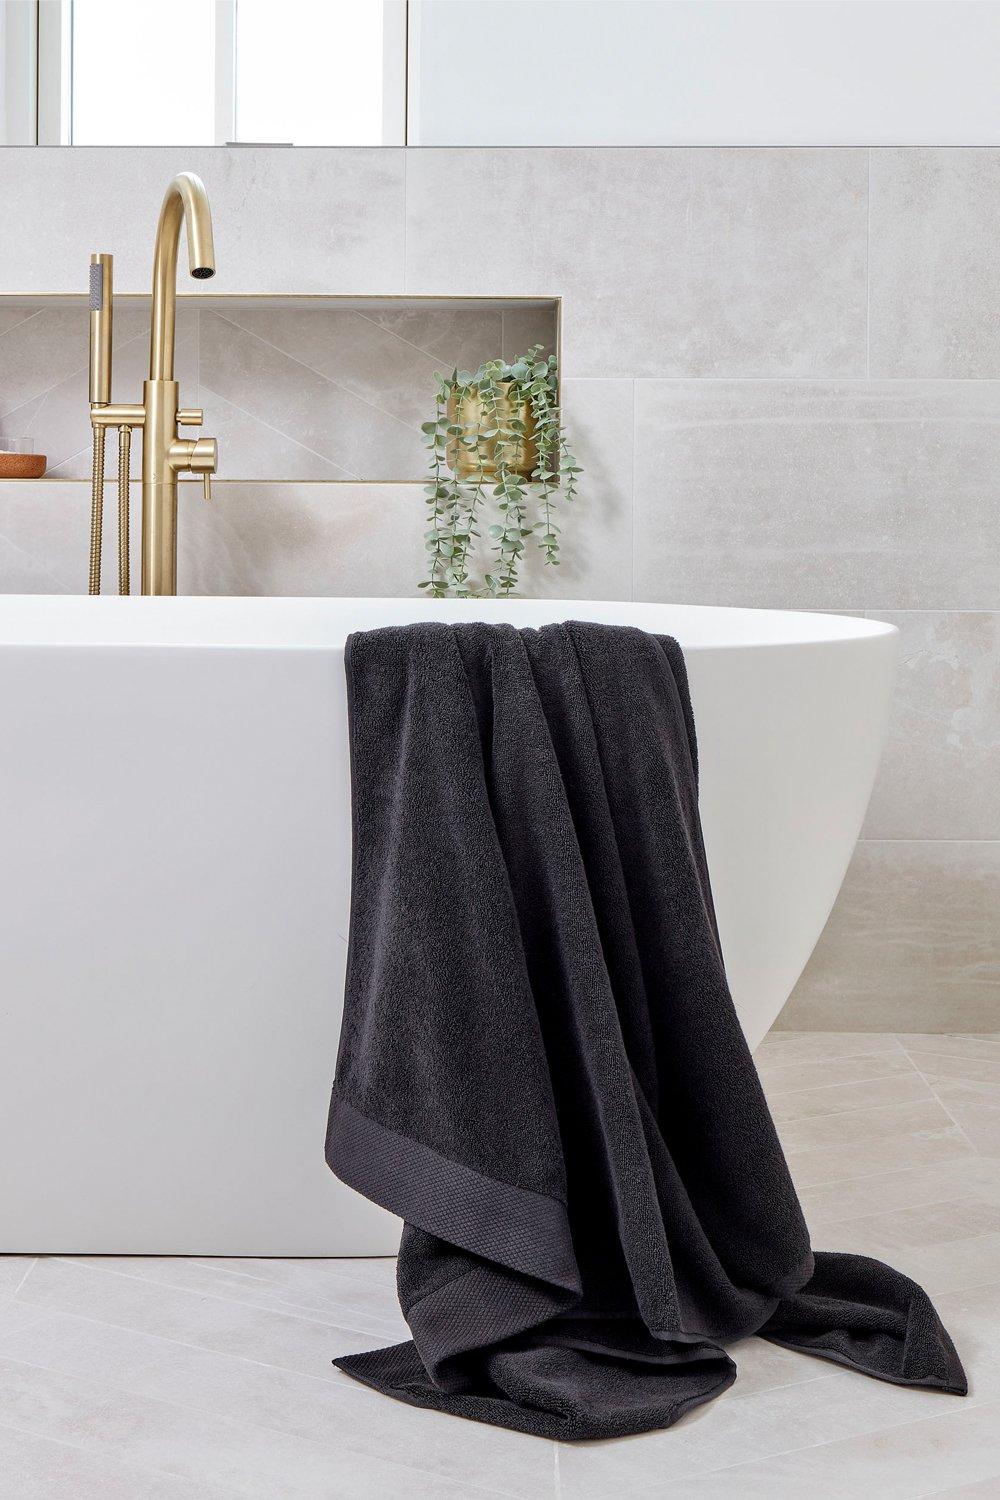 Christy - Luxe Towel - Black - Bath Towel